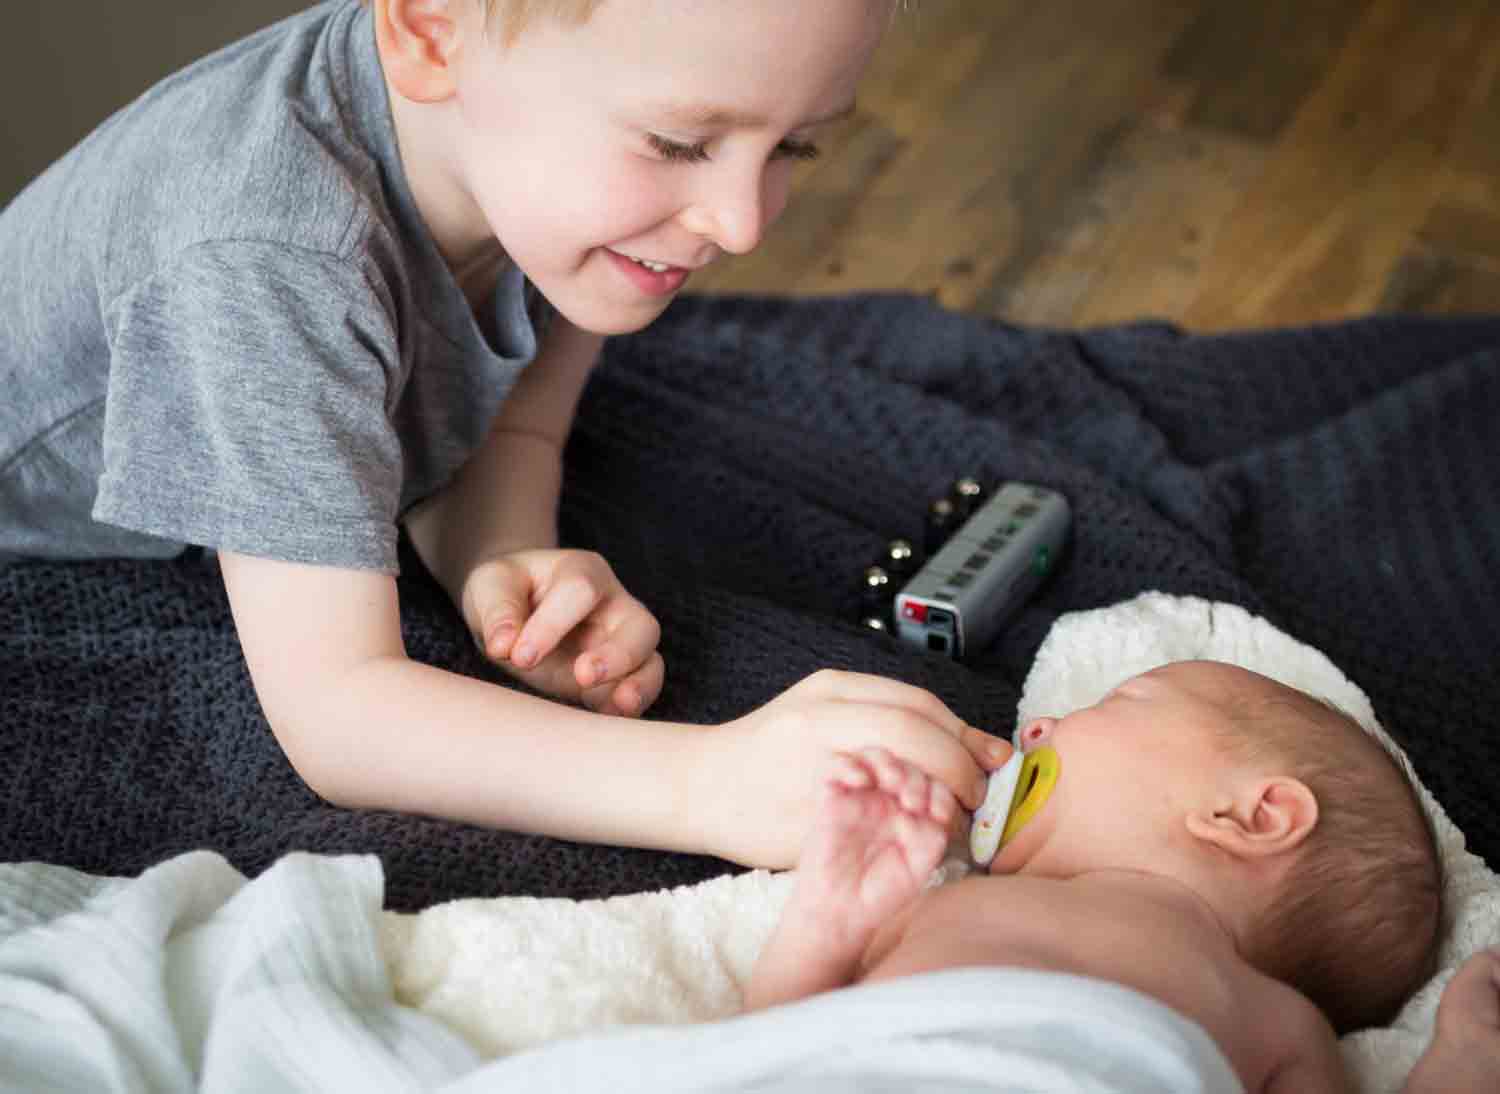 Little boy giving pacifier to newborn baby